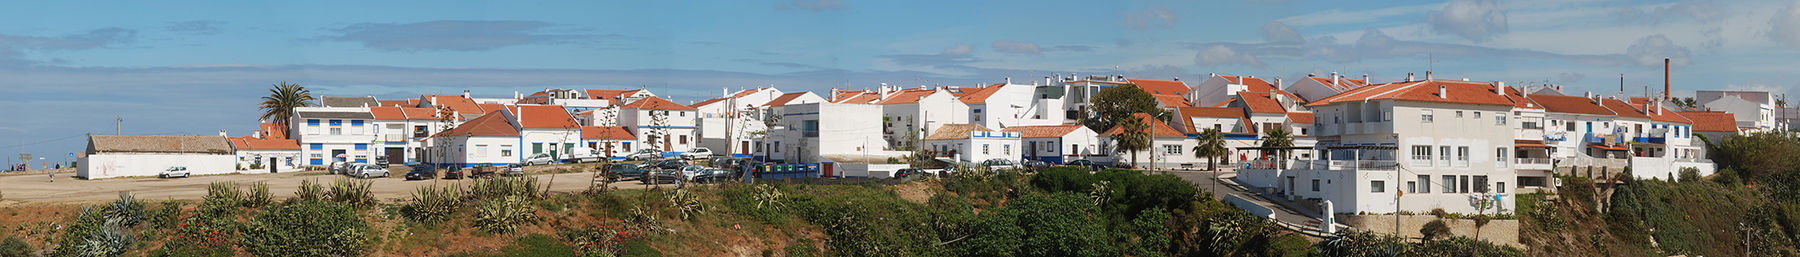 Porto Covo banner.jpg